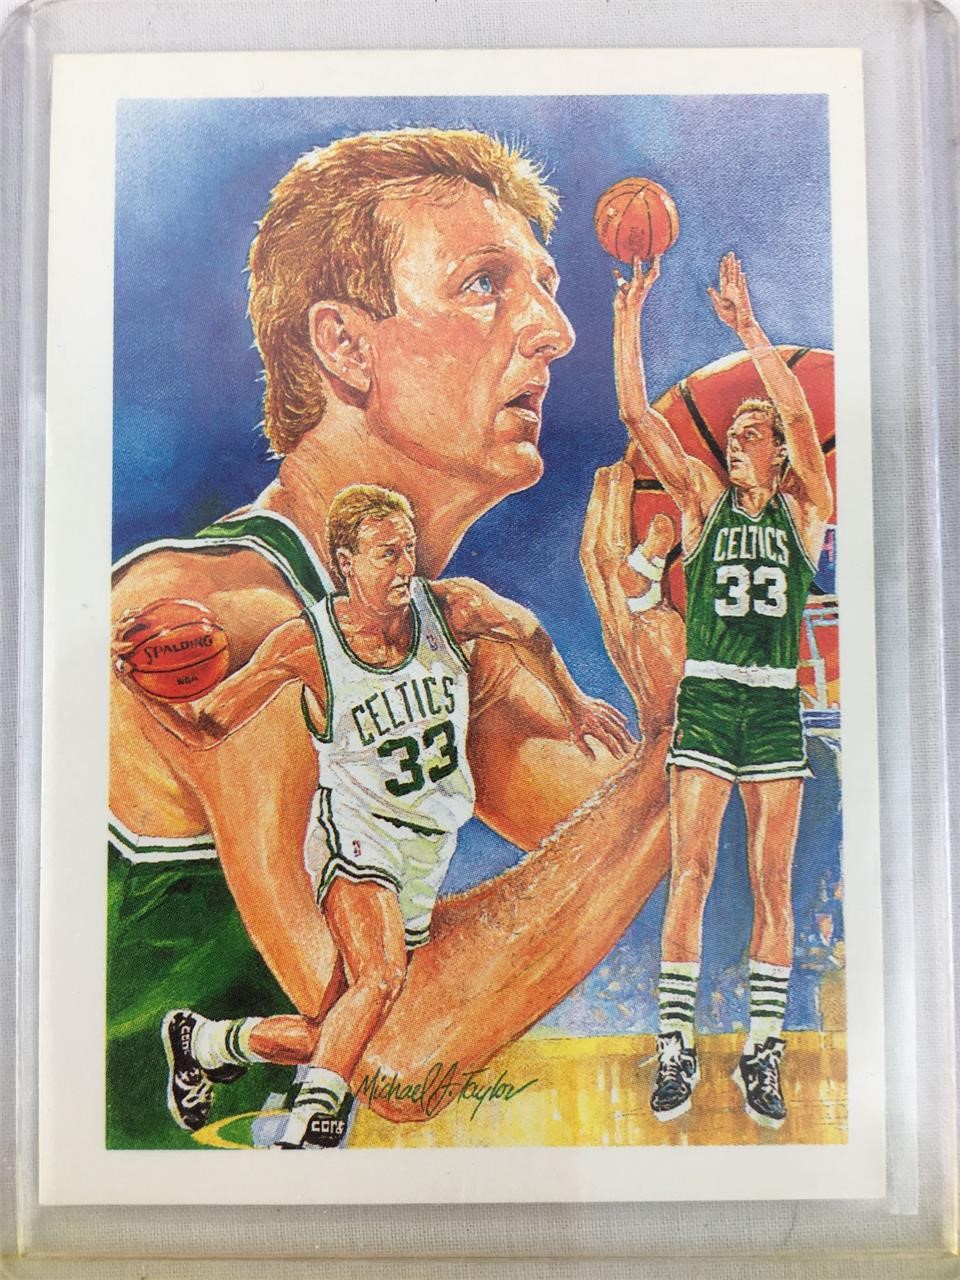 1990 Larry Bird NBA Hoops #356